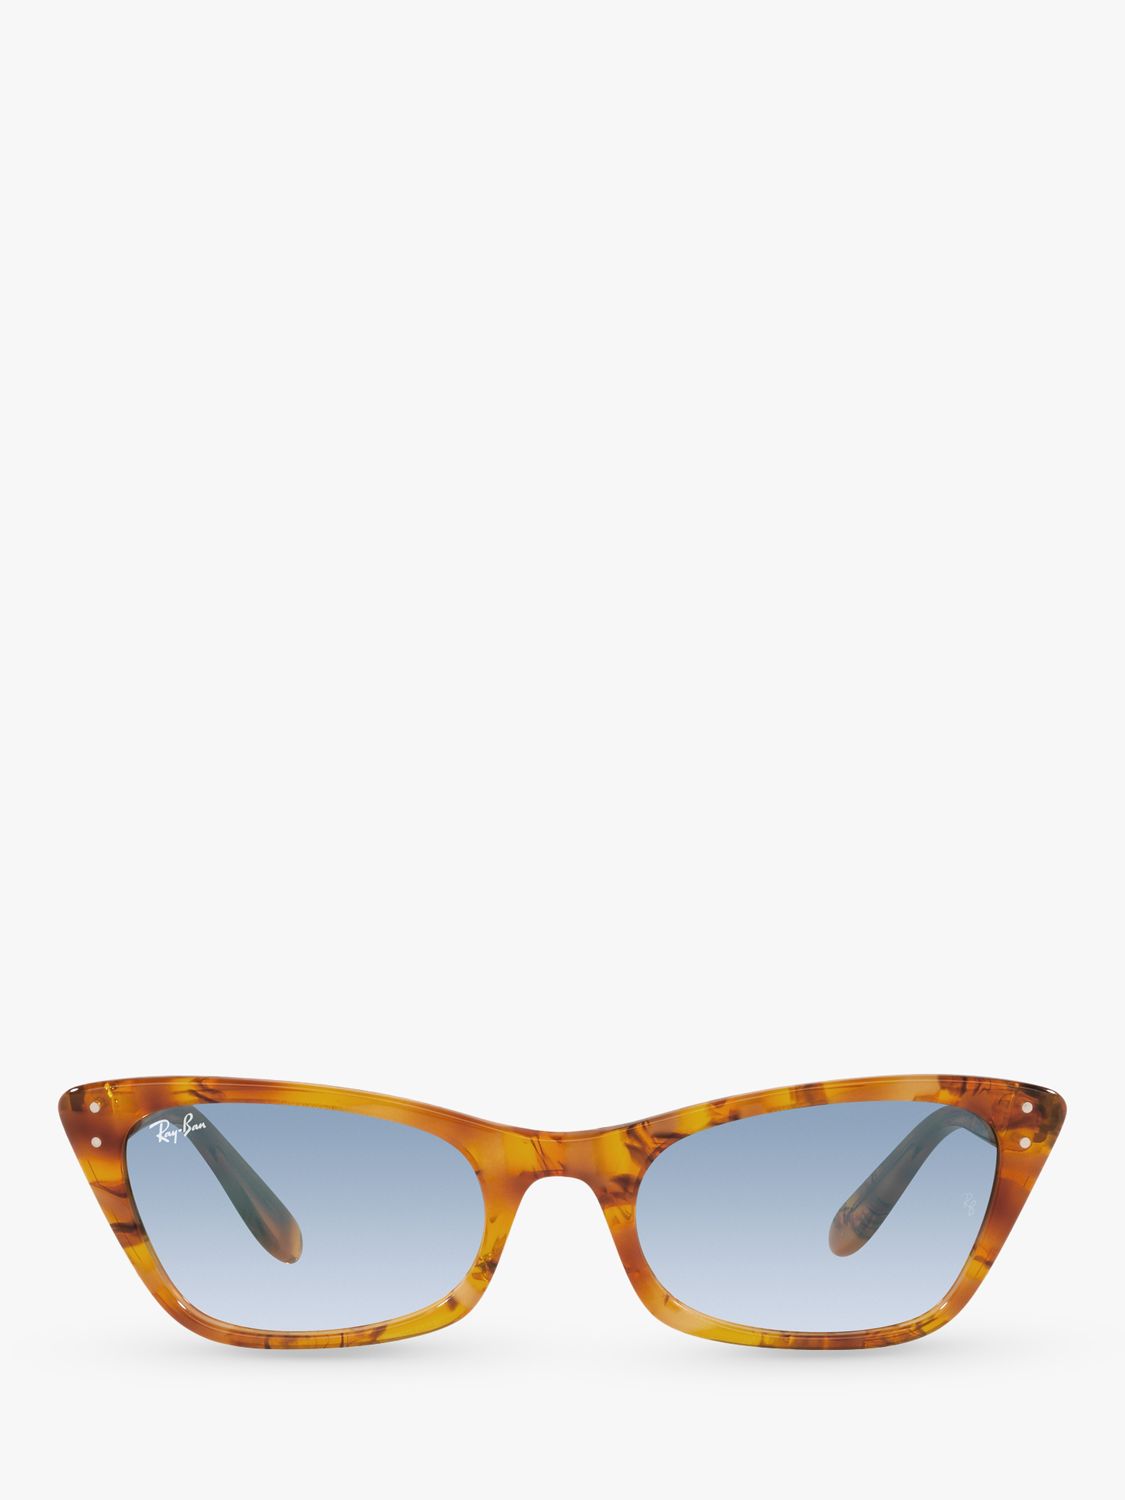 Ray-Ban RB2299 Women's Lady Burbank Cat's Eye Sunglasses, Amber Tortoise/Blue Gradient